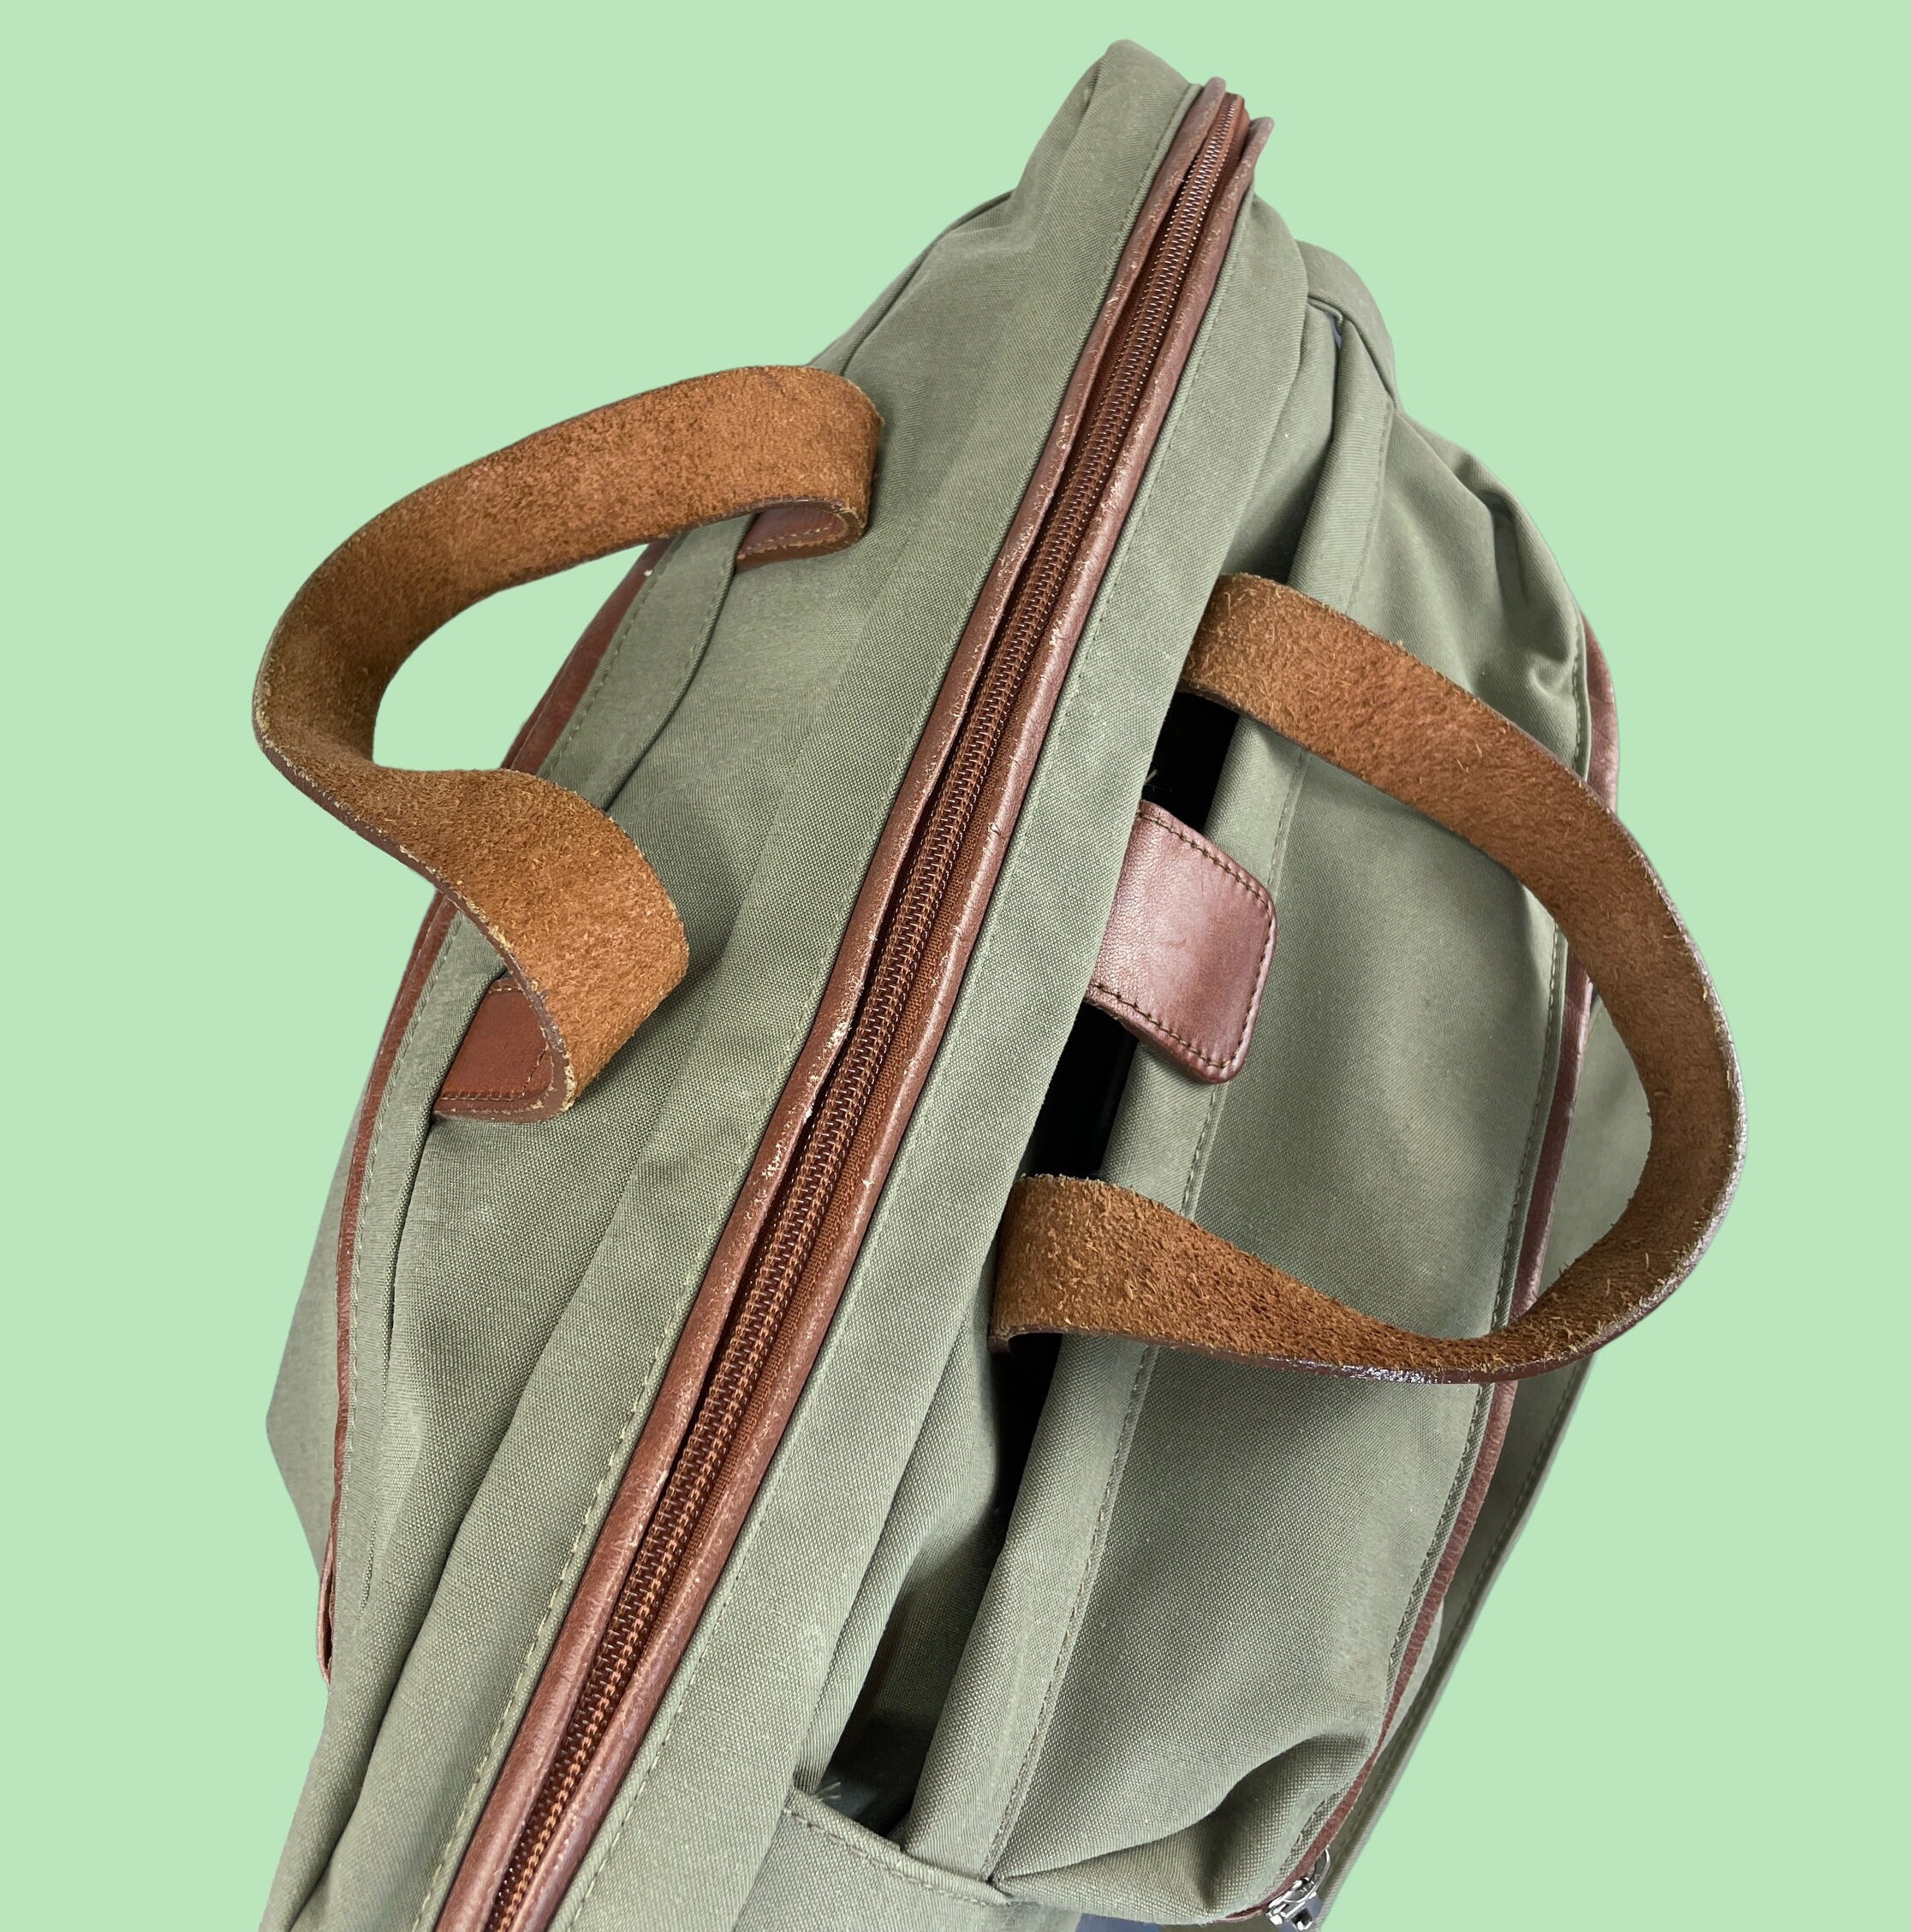 Buy YBC 100% Waterproof 30 L Outdoor Dry Backpack (Grey) … at Amazon.in